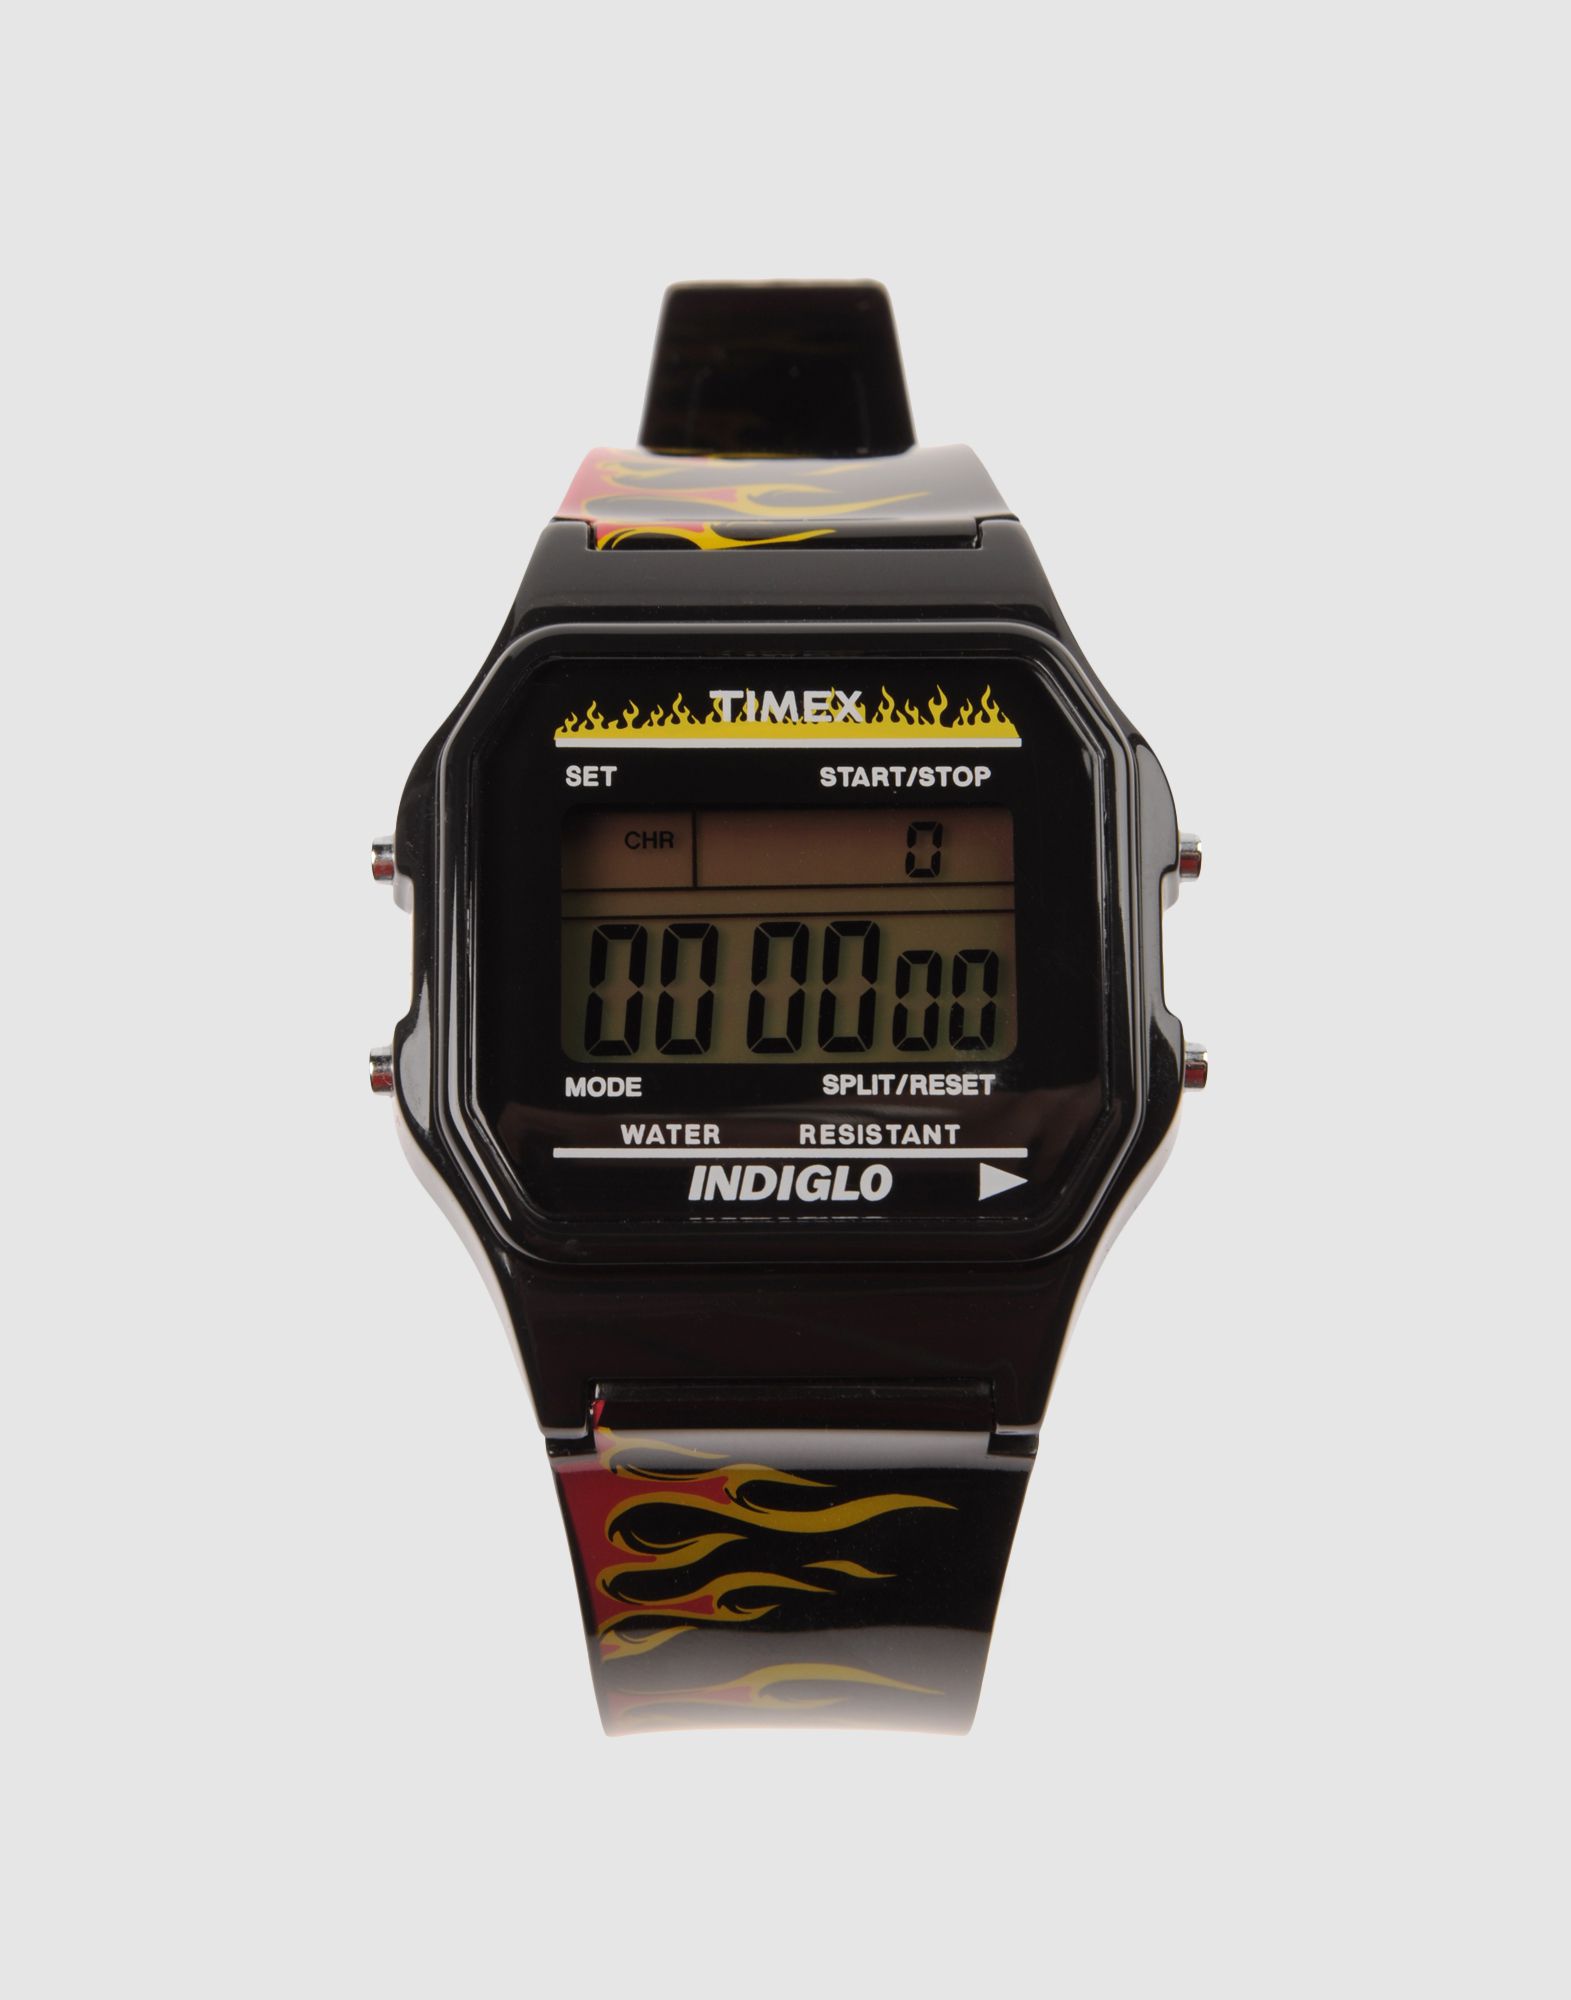 Foto timex relojes de pulsera
